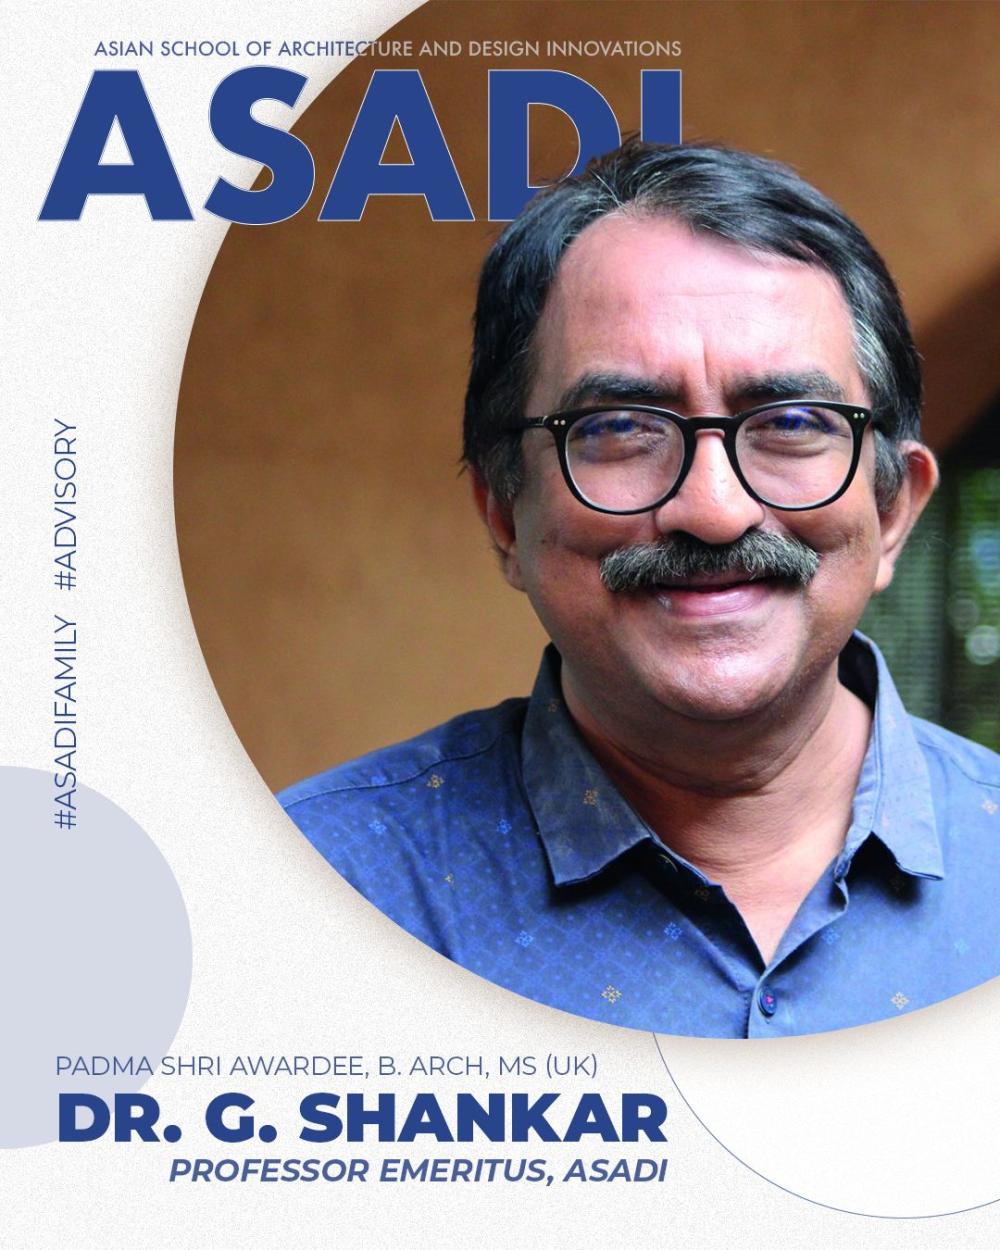 Padmashri Dr. G Shankar joins us as our Professor Emeritus